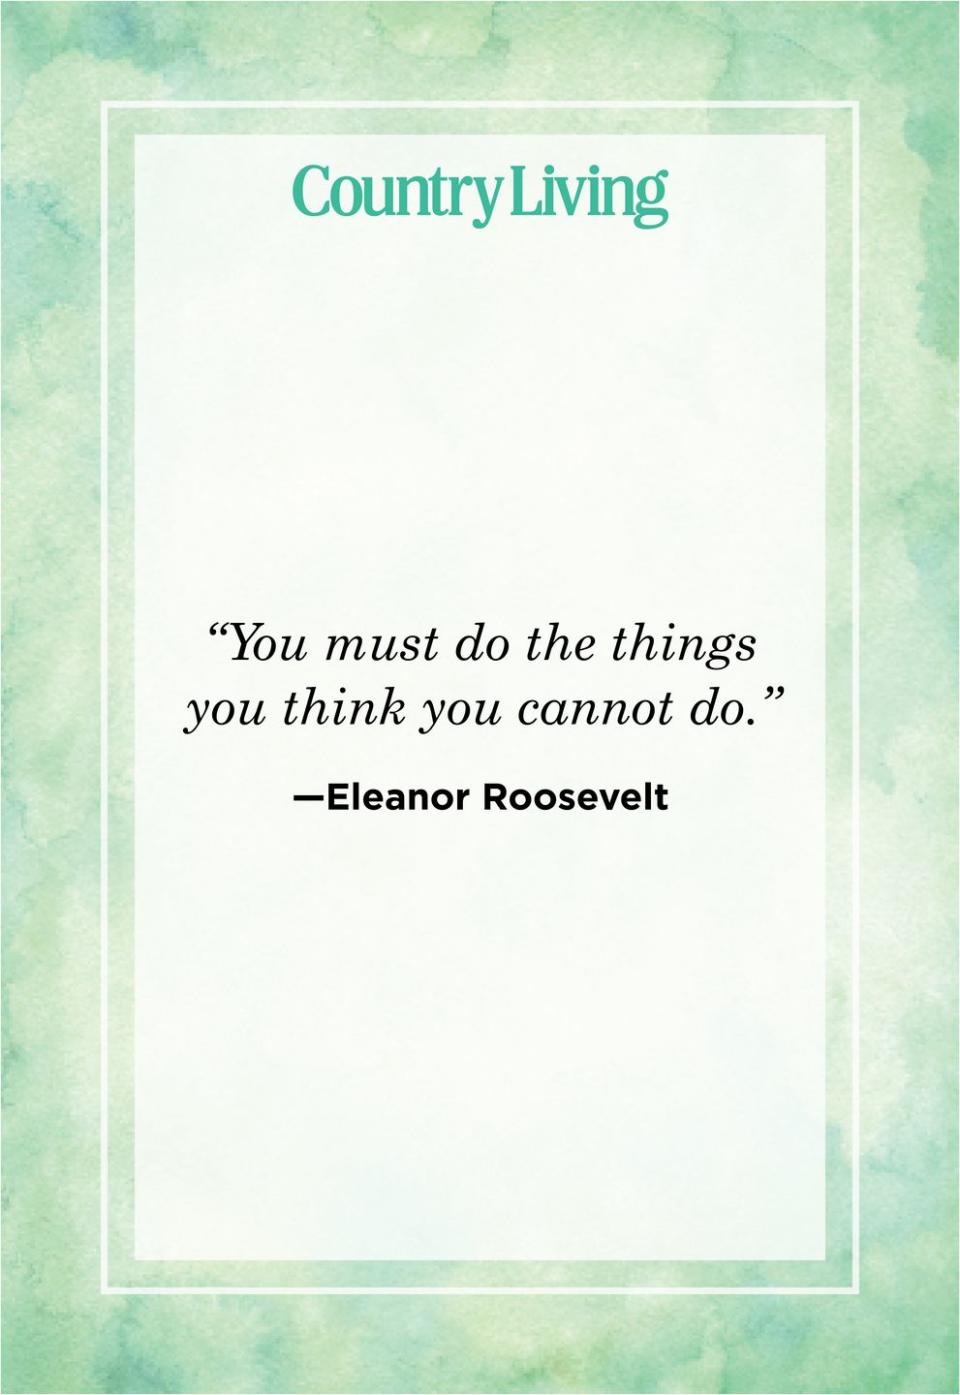 22) Eleanor Roosevelt